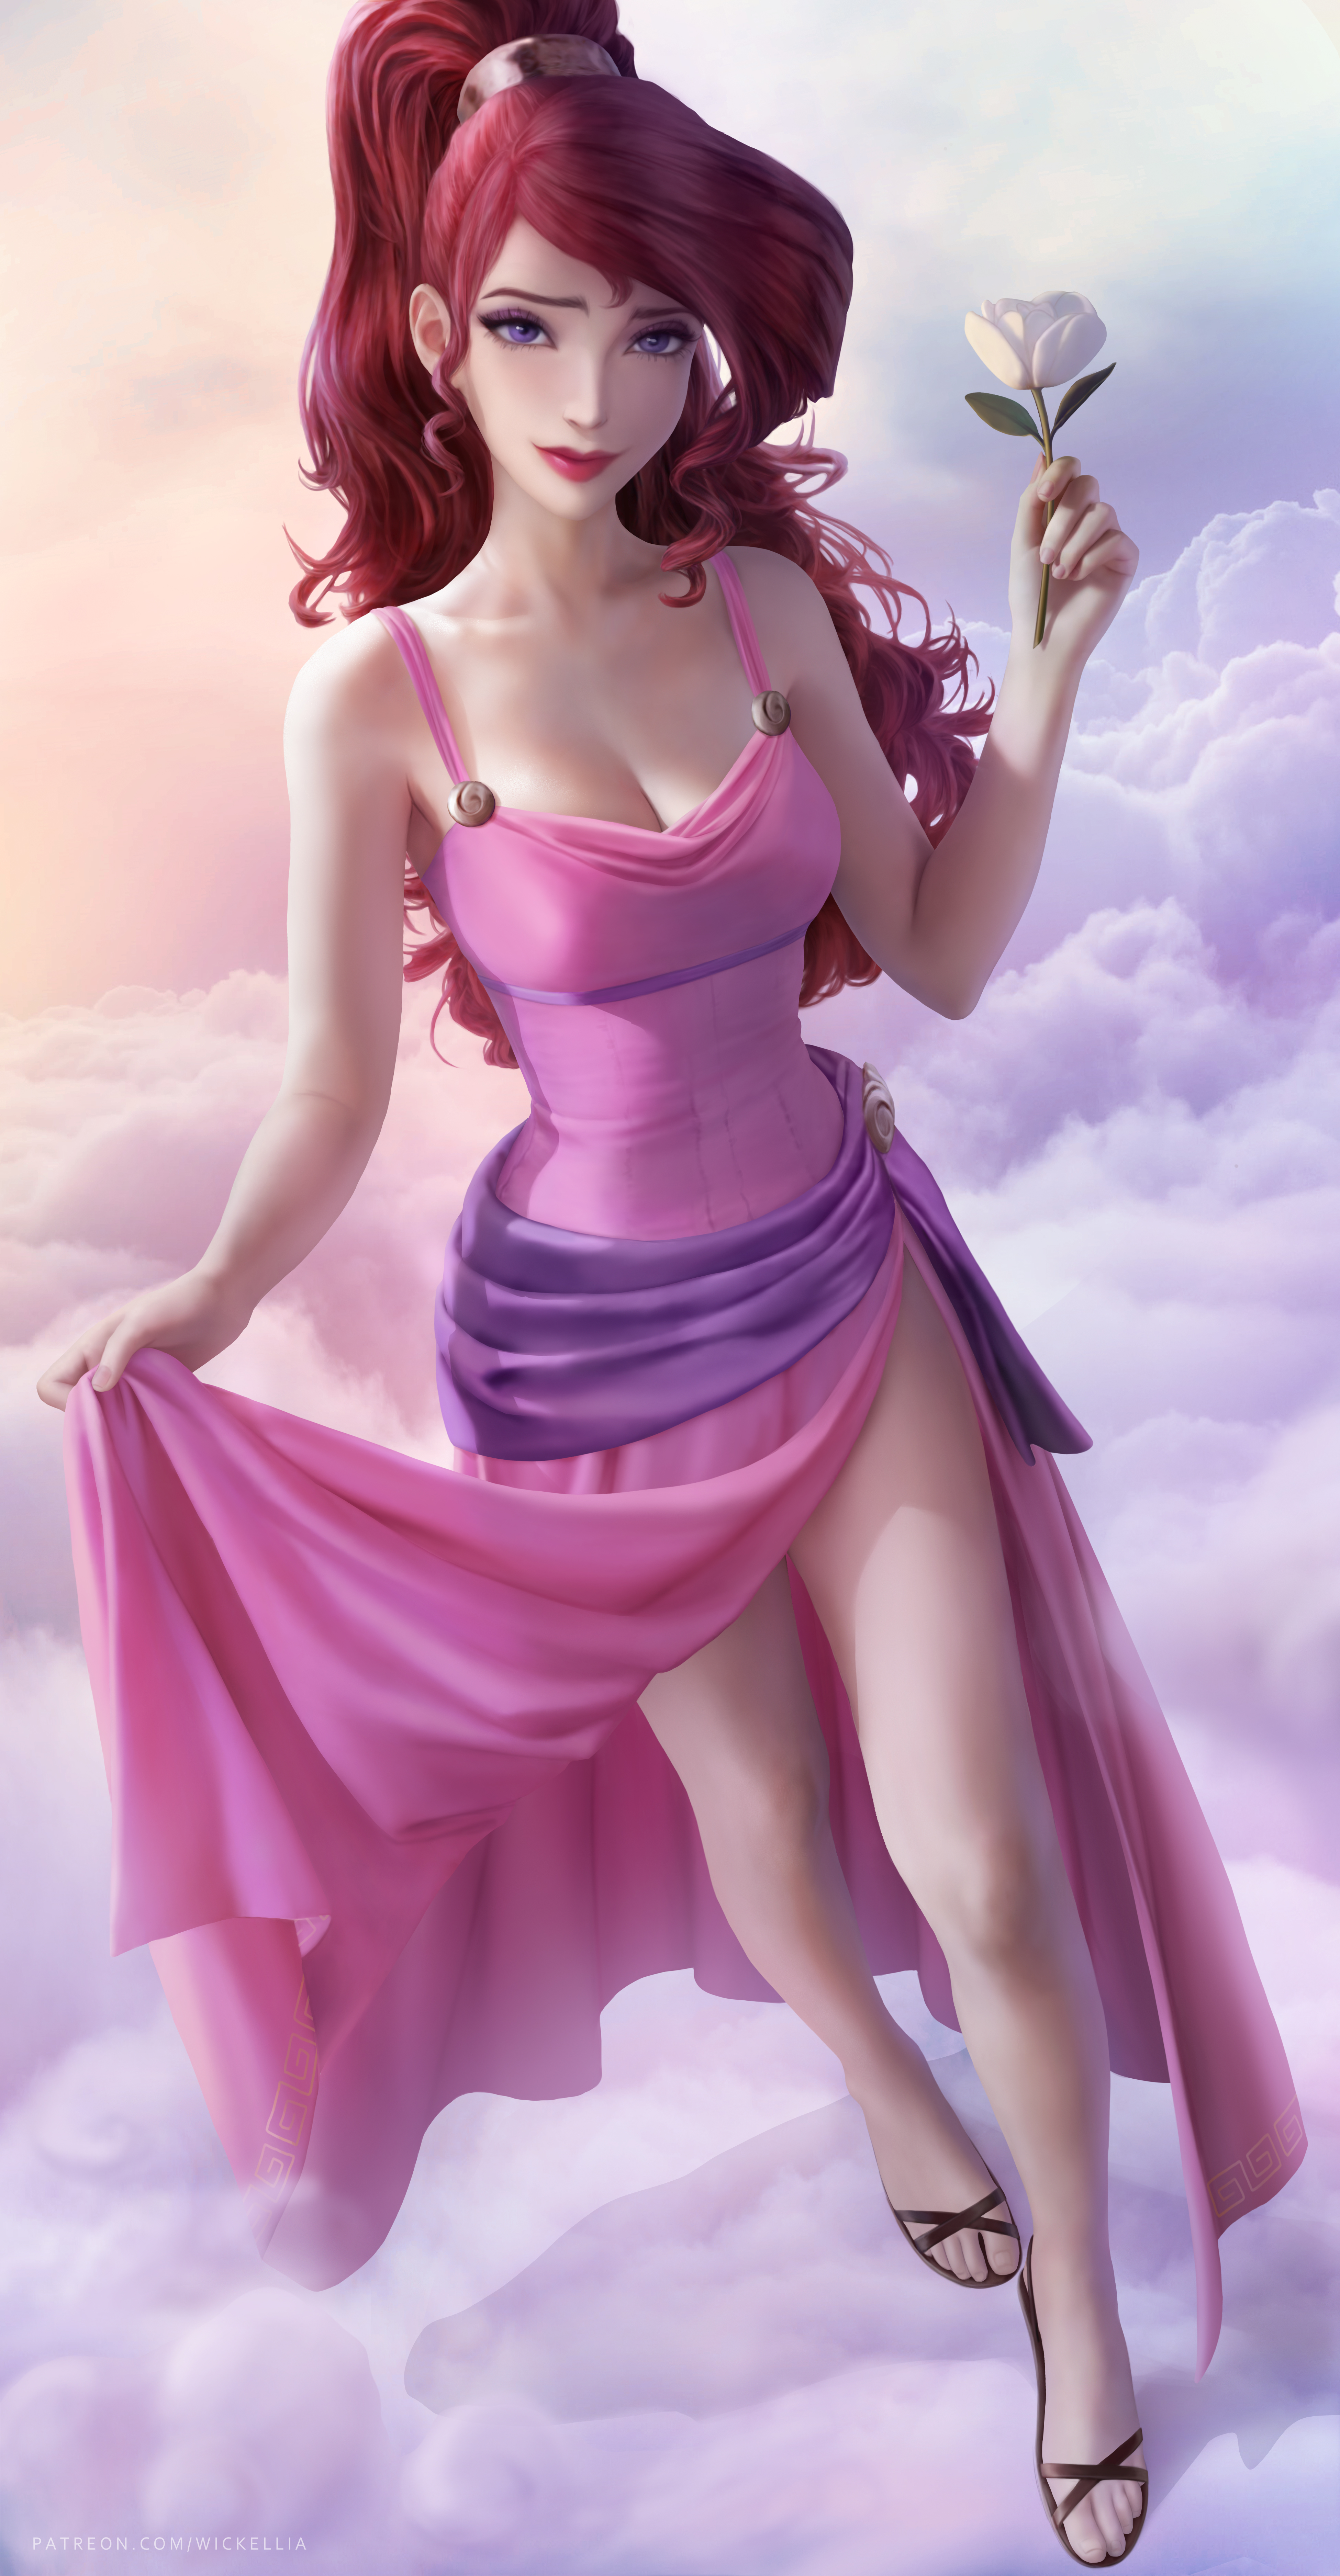 Hercules Fictional Character Redhead Dress Flowers 2D Artwork Drawing Fan Art Wickellia 3900x7500